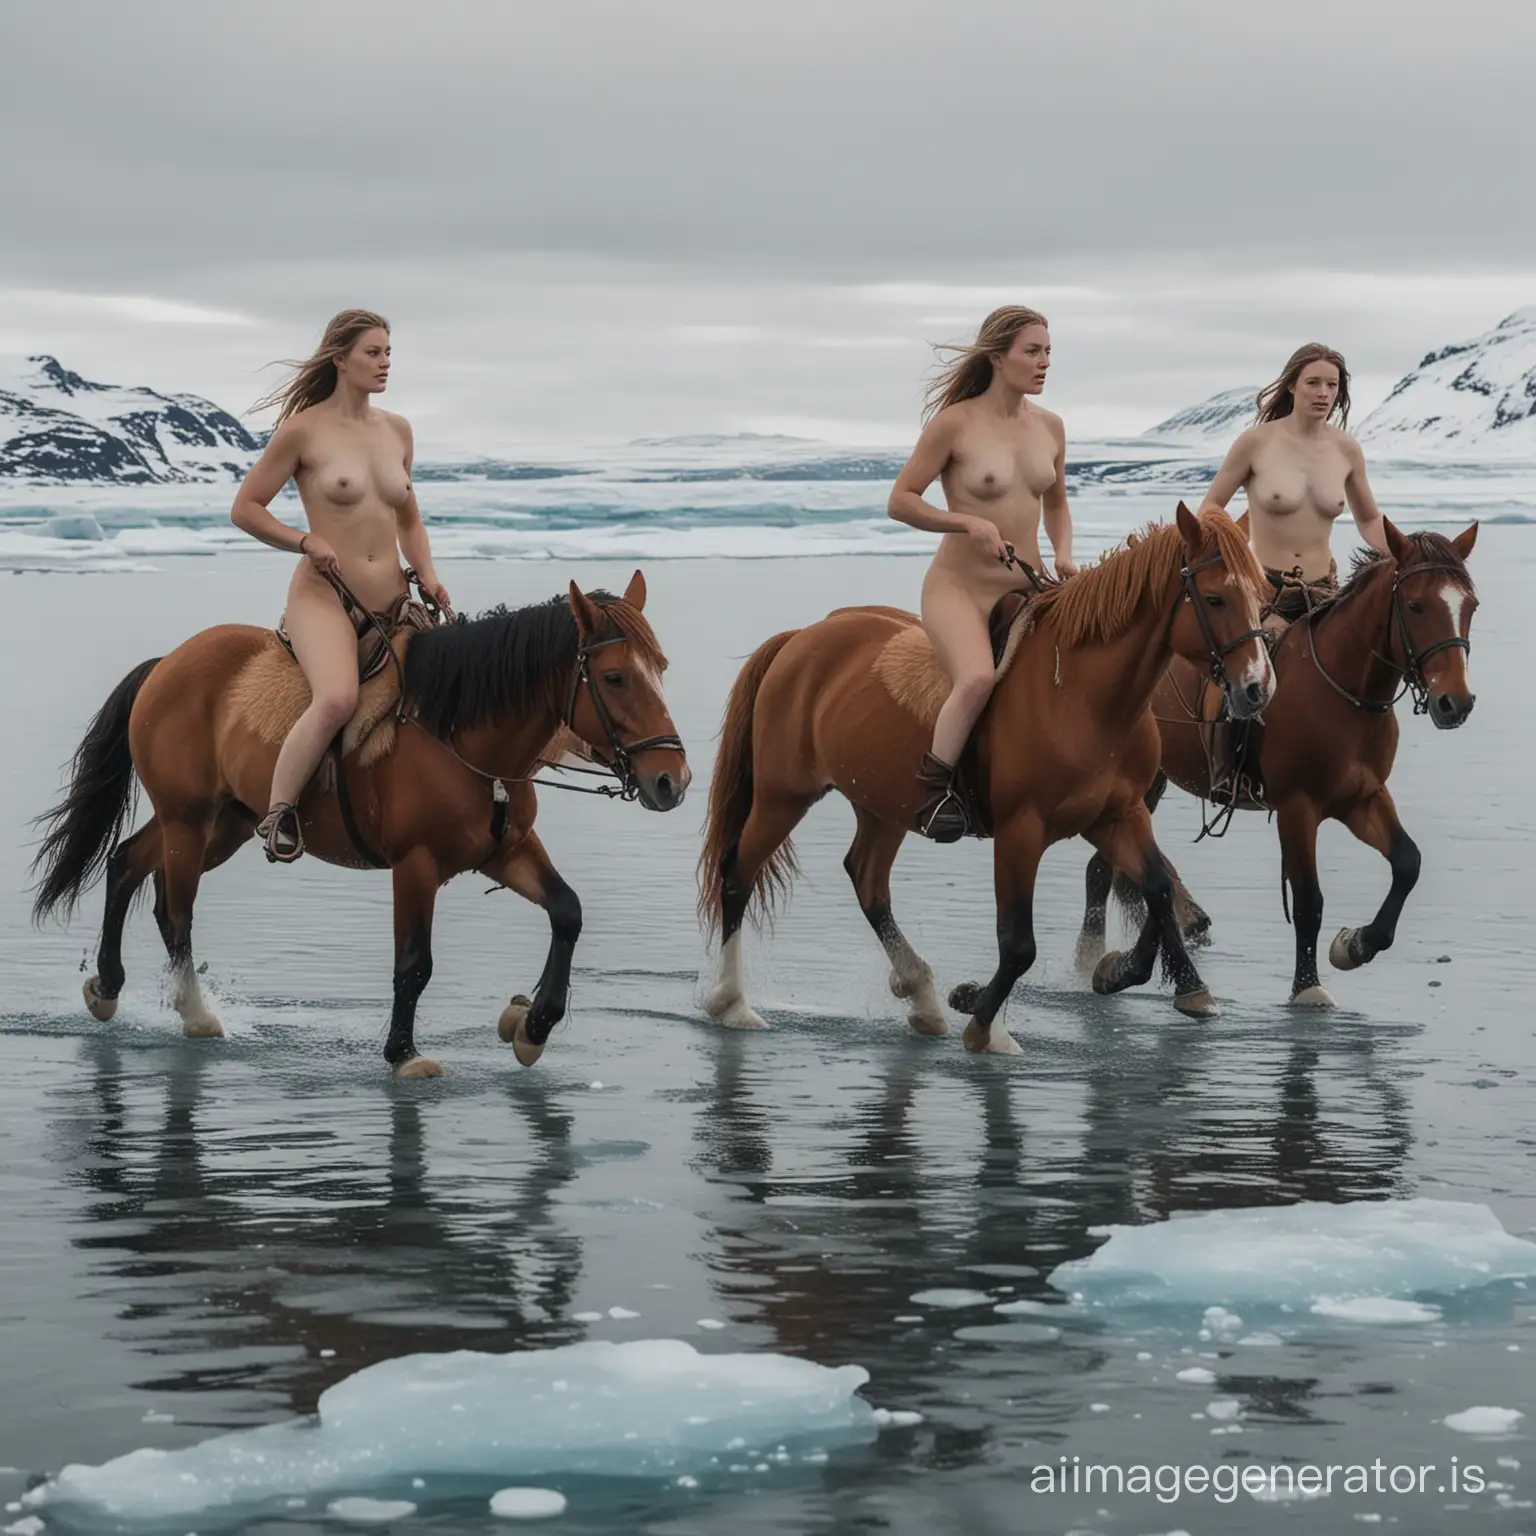 Nude-Icelandic-Warrior-Women-Riding-Horses-Across-Icy-Floes